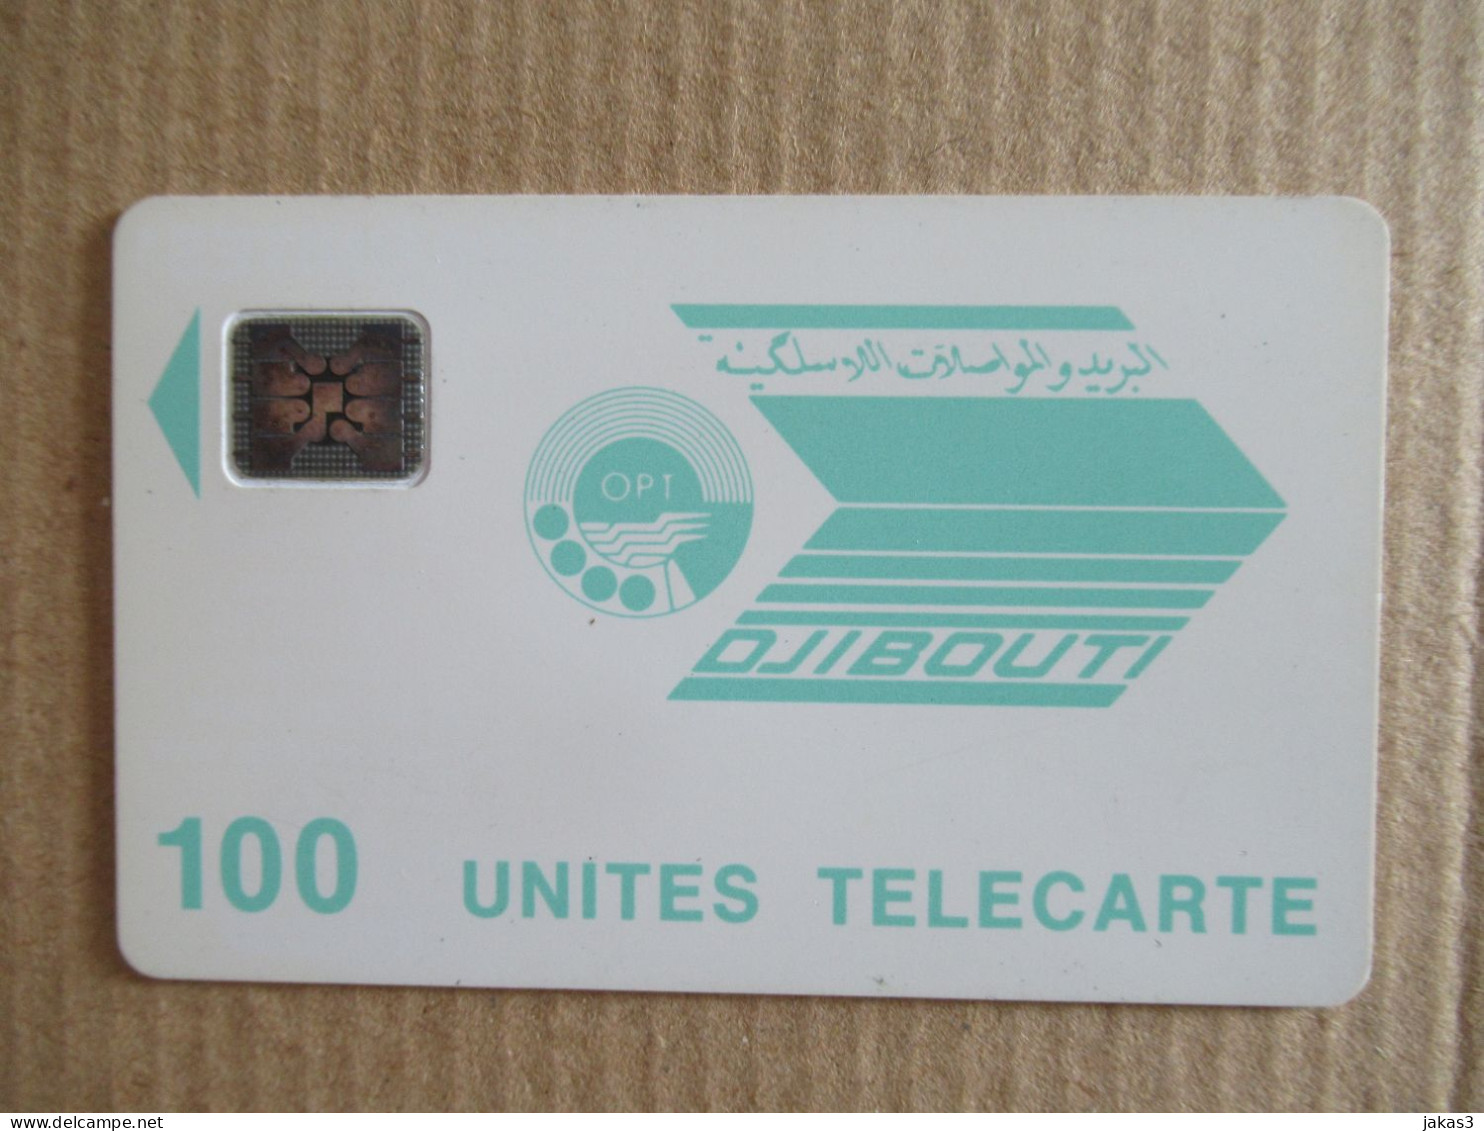 TÉLÉCARTE- PHONECARD - DJIBOUTI - 100 UNITÉS - TRÈS BON ETAT - RARE - - Djibouti